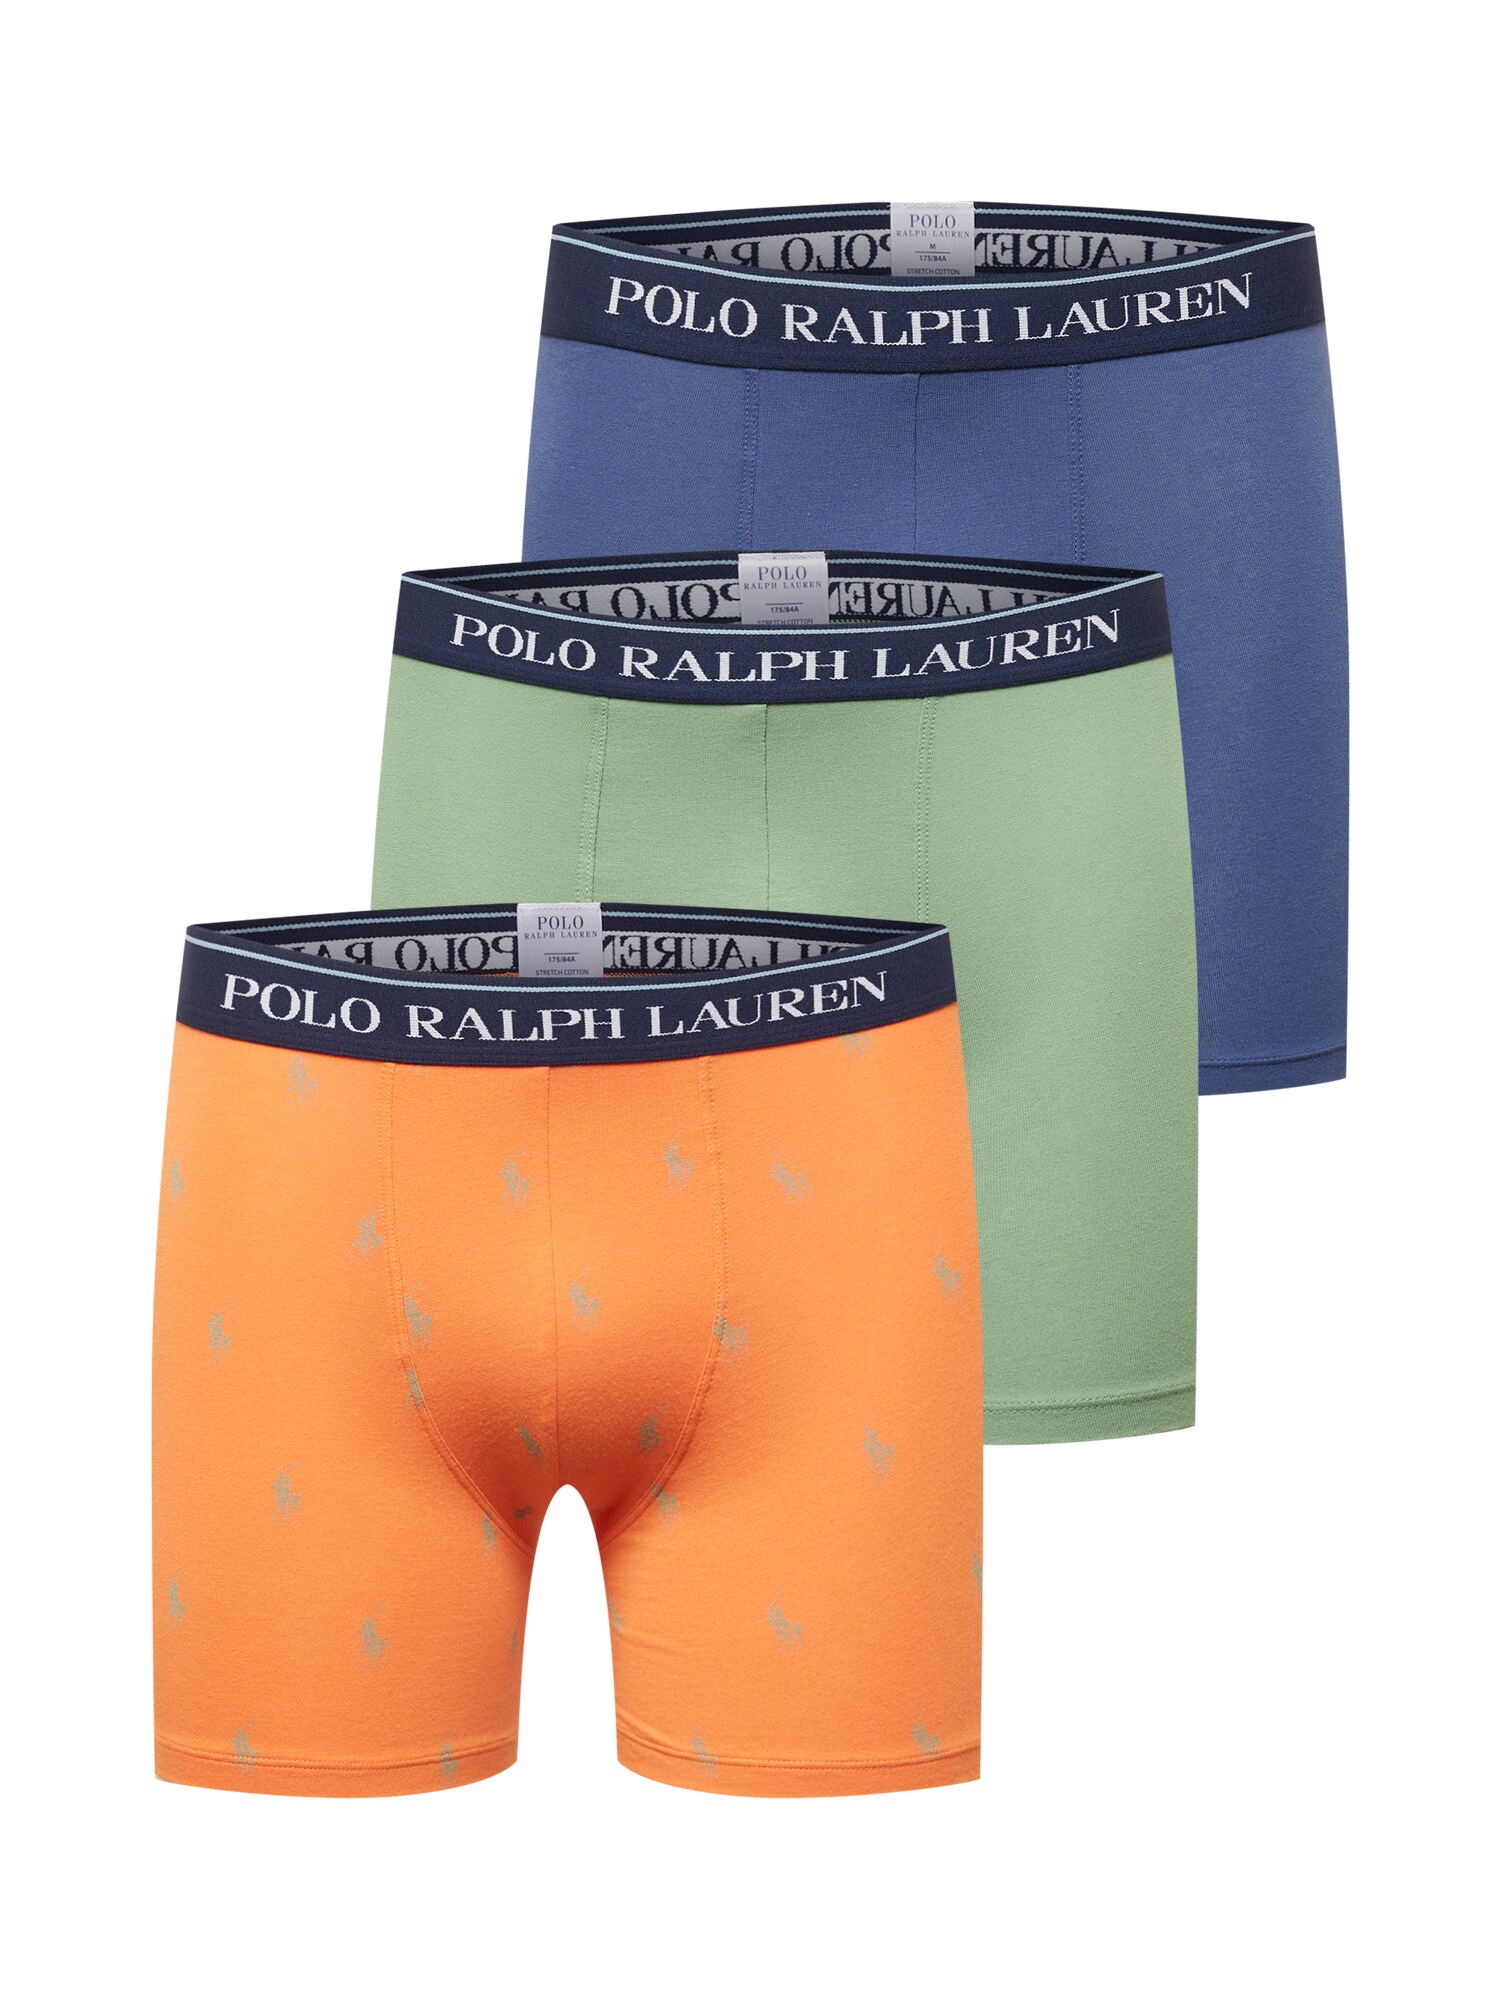 Polo Ralph Lauren Boxershorts orange / navy / grn / wei